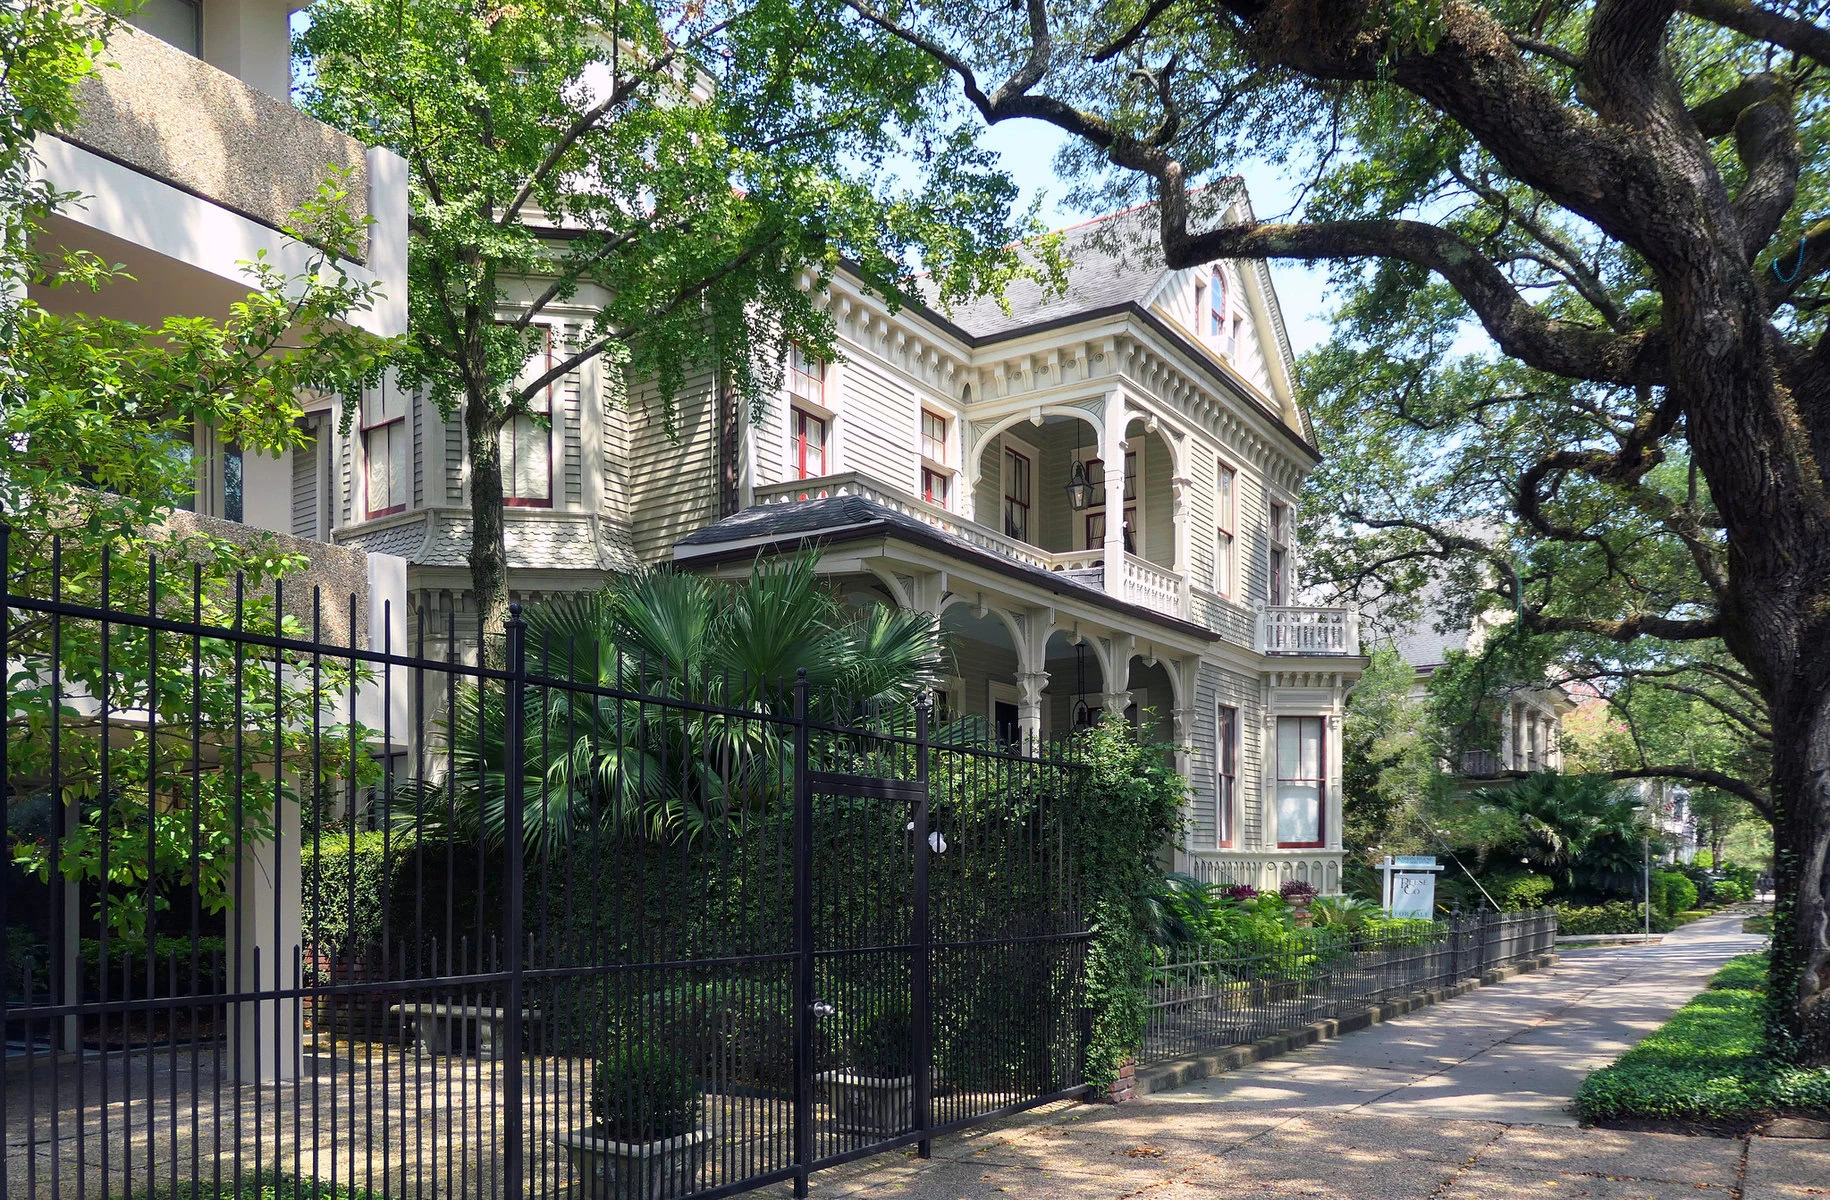 Homes in New Orleans' garden district.